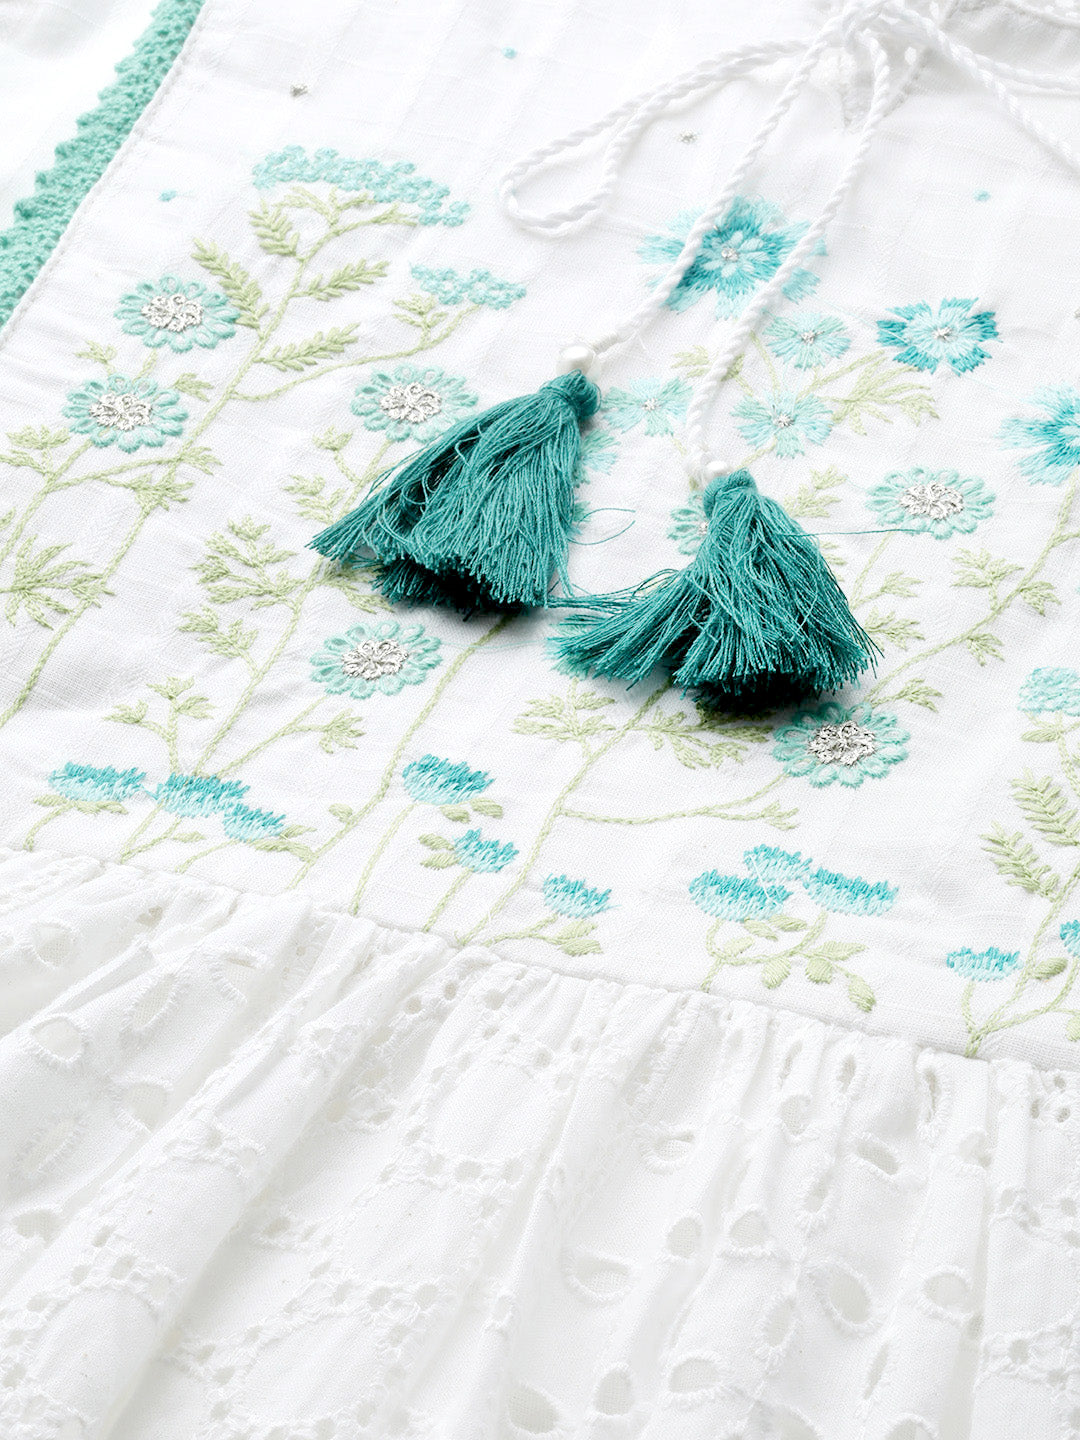 Ishin Women's Cotton White & Sea Green Schiffli Embroidered A-Line Dress